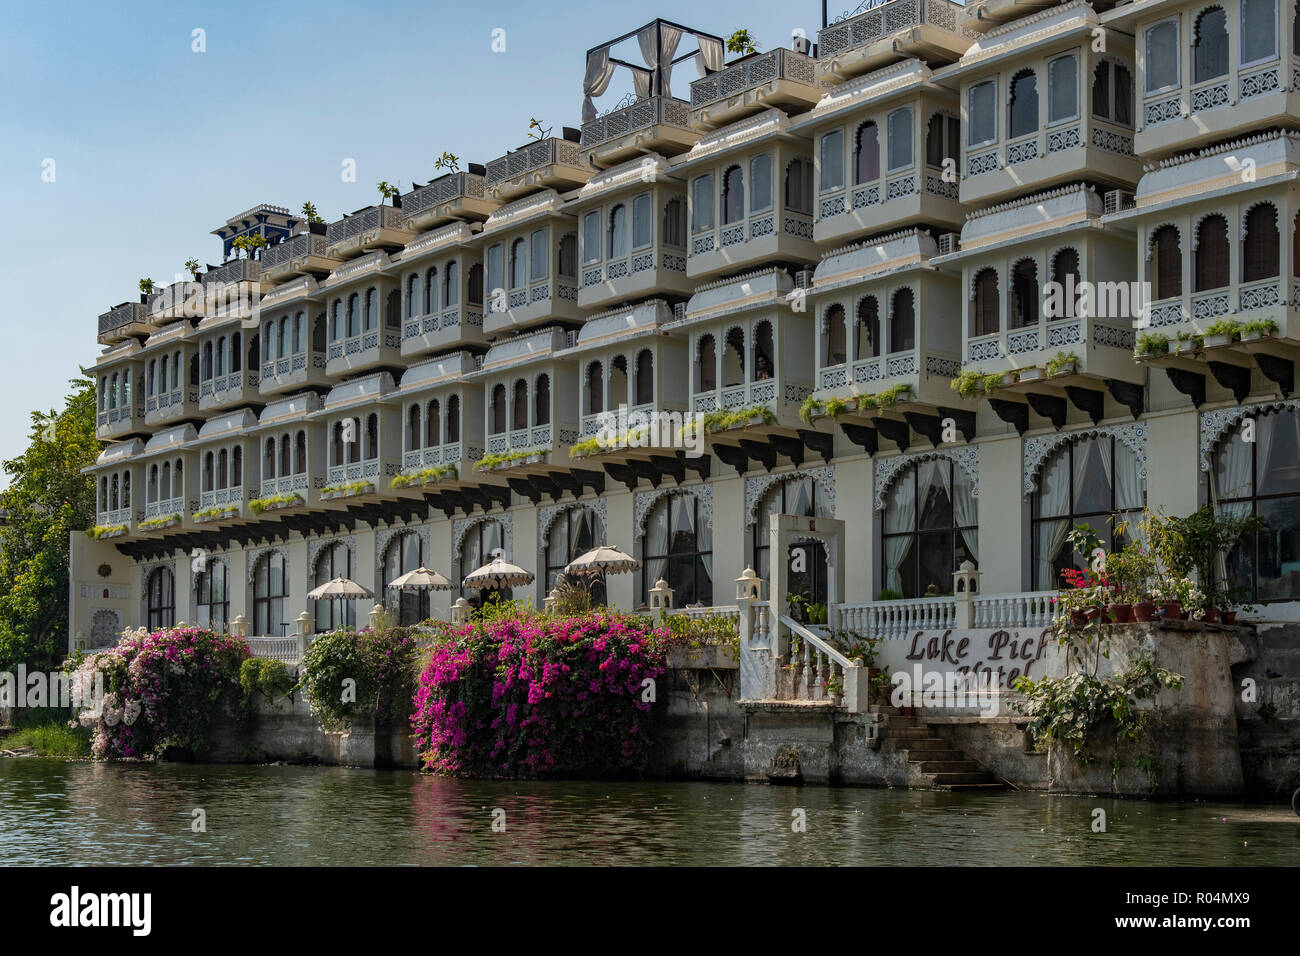 Lake Pichola Hotel, Udaipur, Rajasthan, India Stock Photo